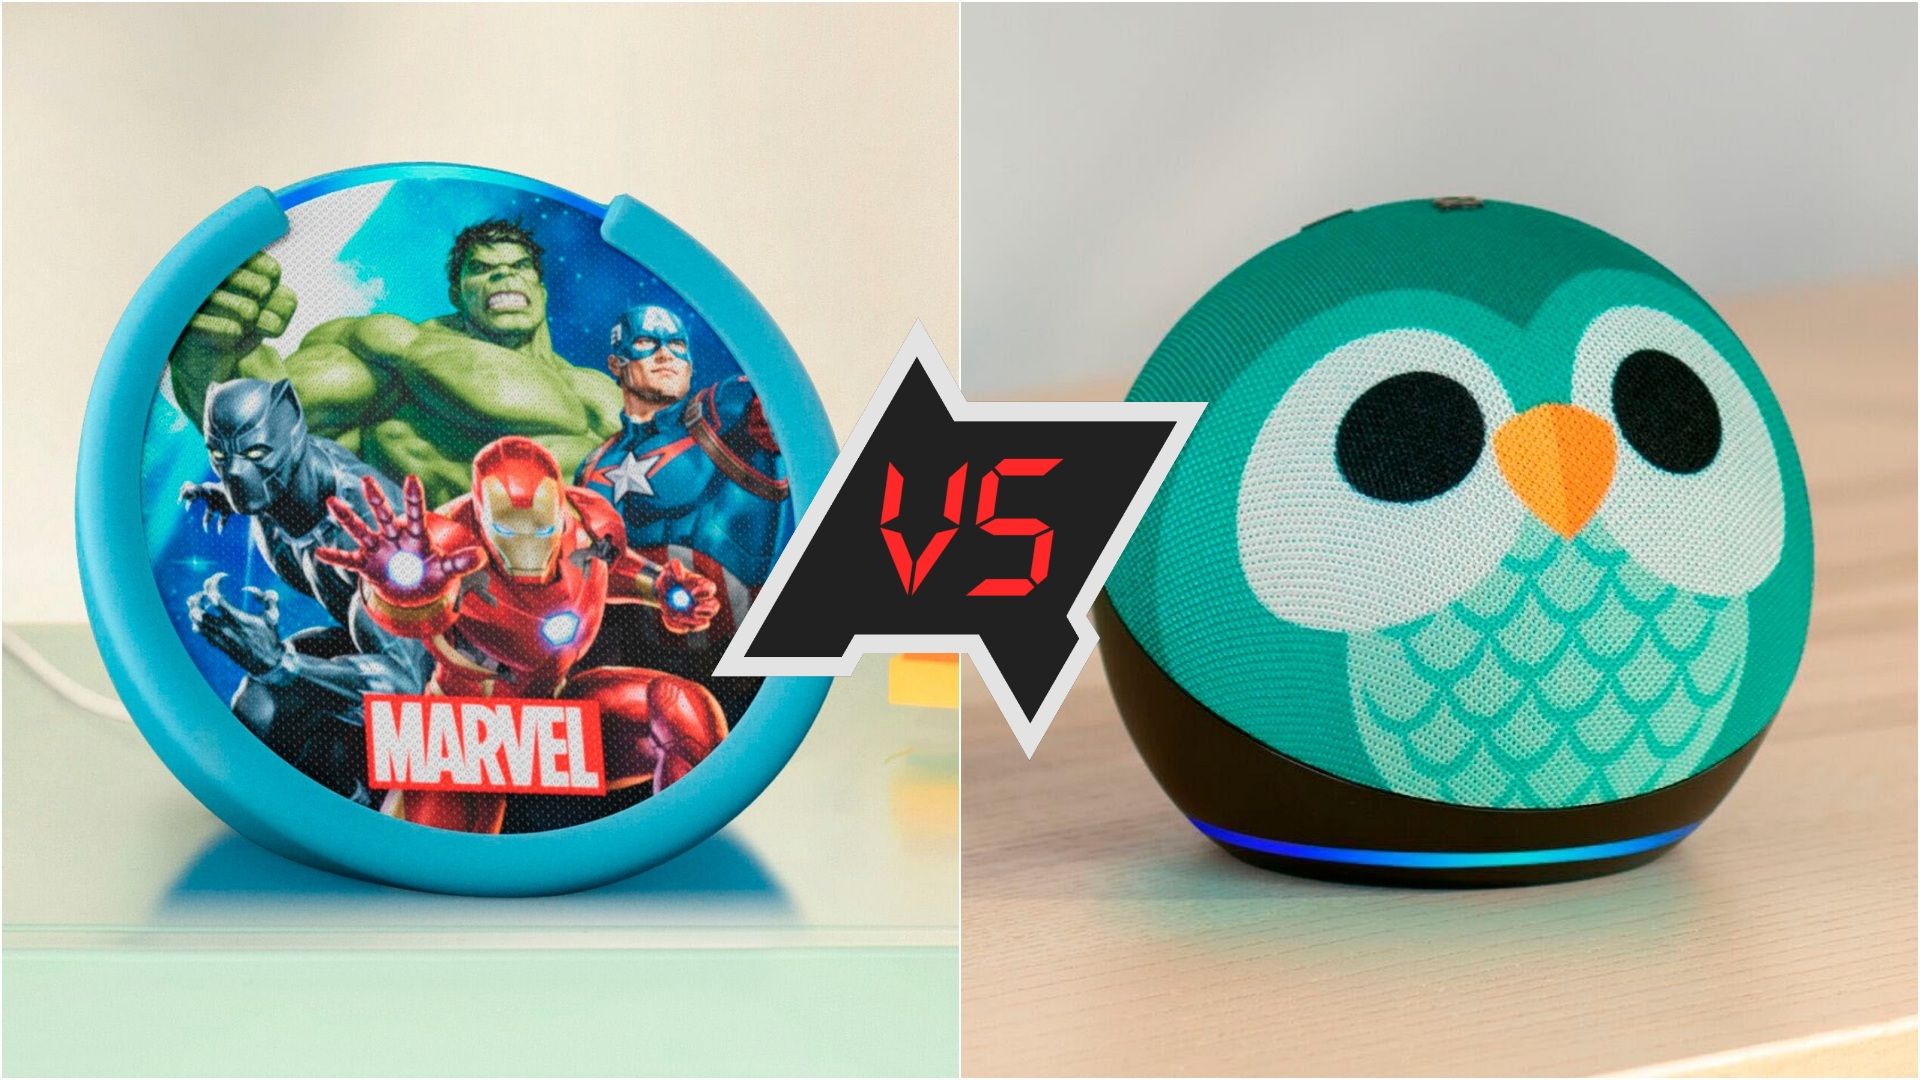 Echo Pop Kids | Designed for kids, with parental controls | Marvel's  Avengers